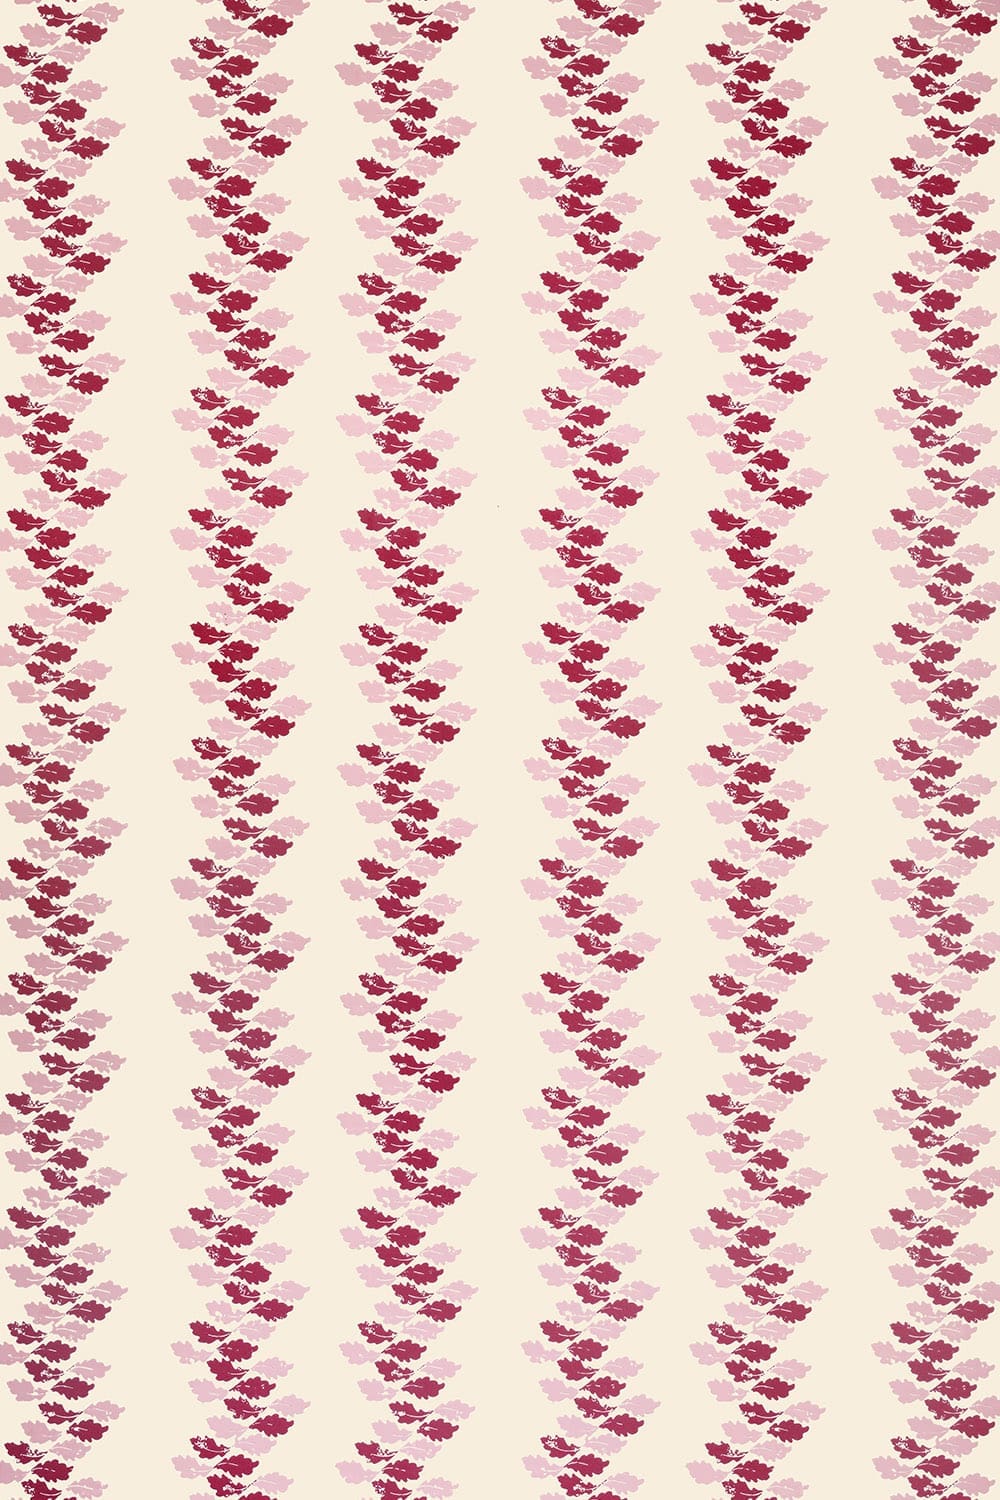 oak-leaves-wallpaper-red-pink-barneby-gates